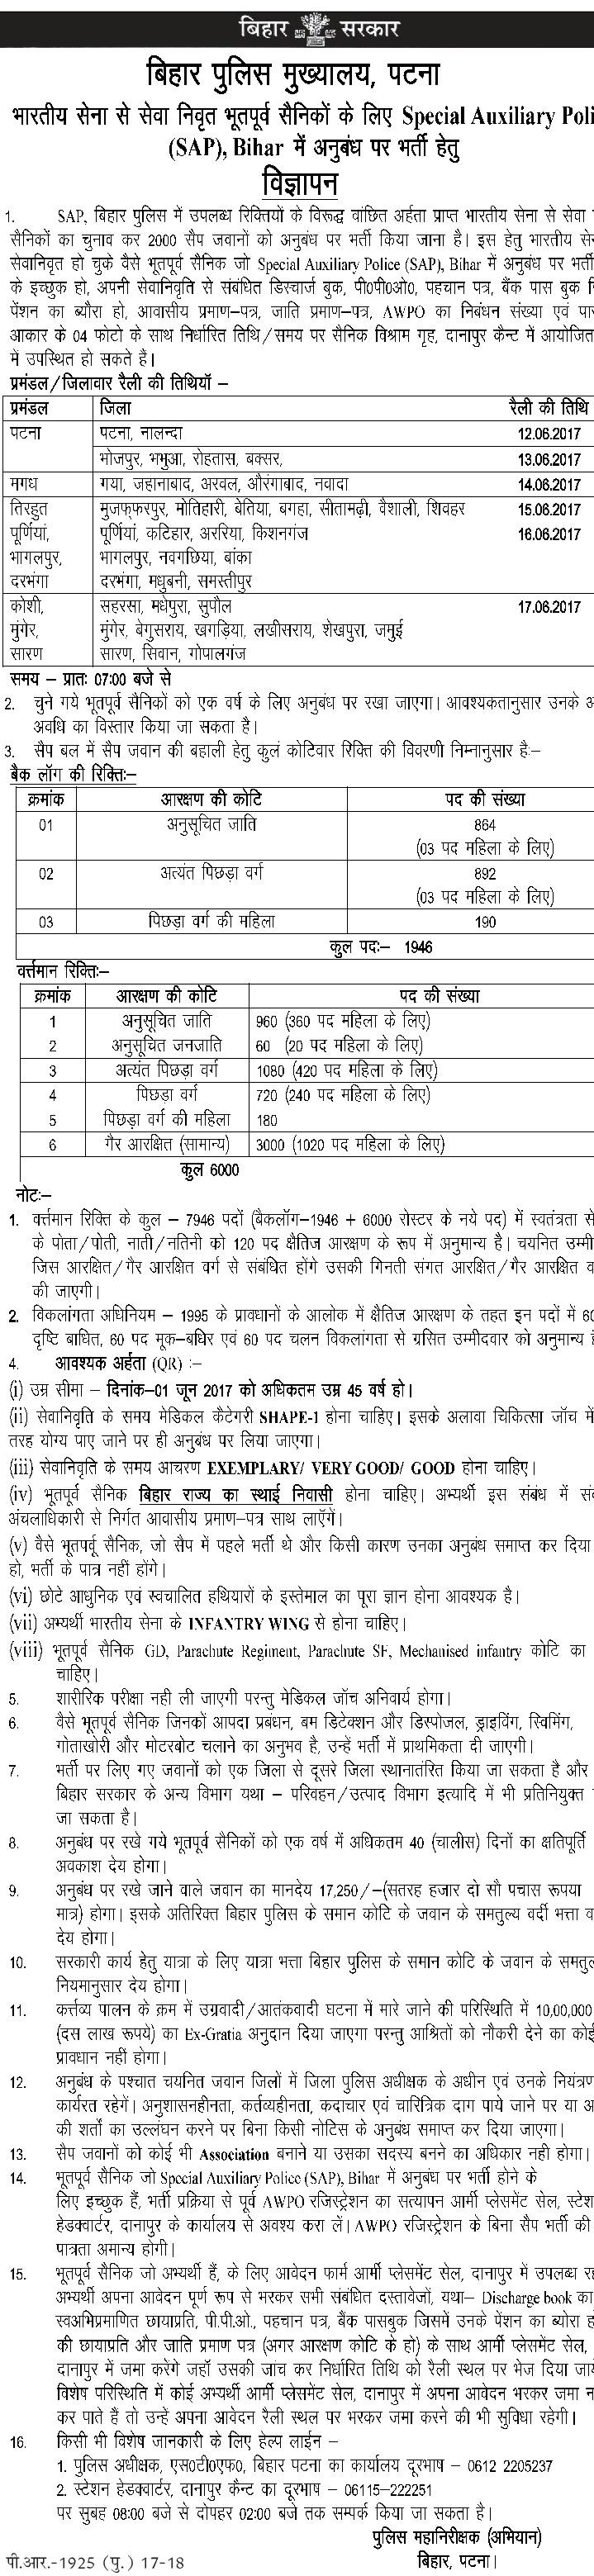 Bihar Police SAP Recruitment